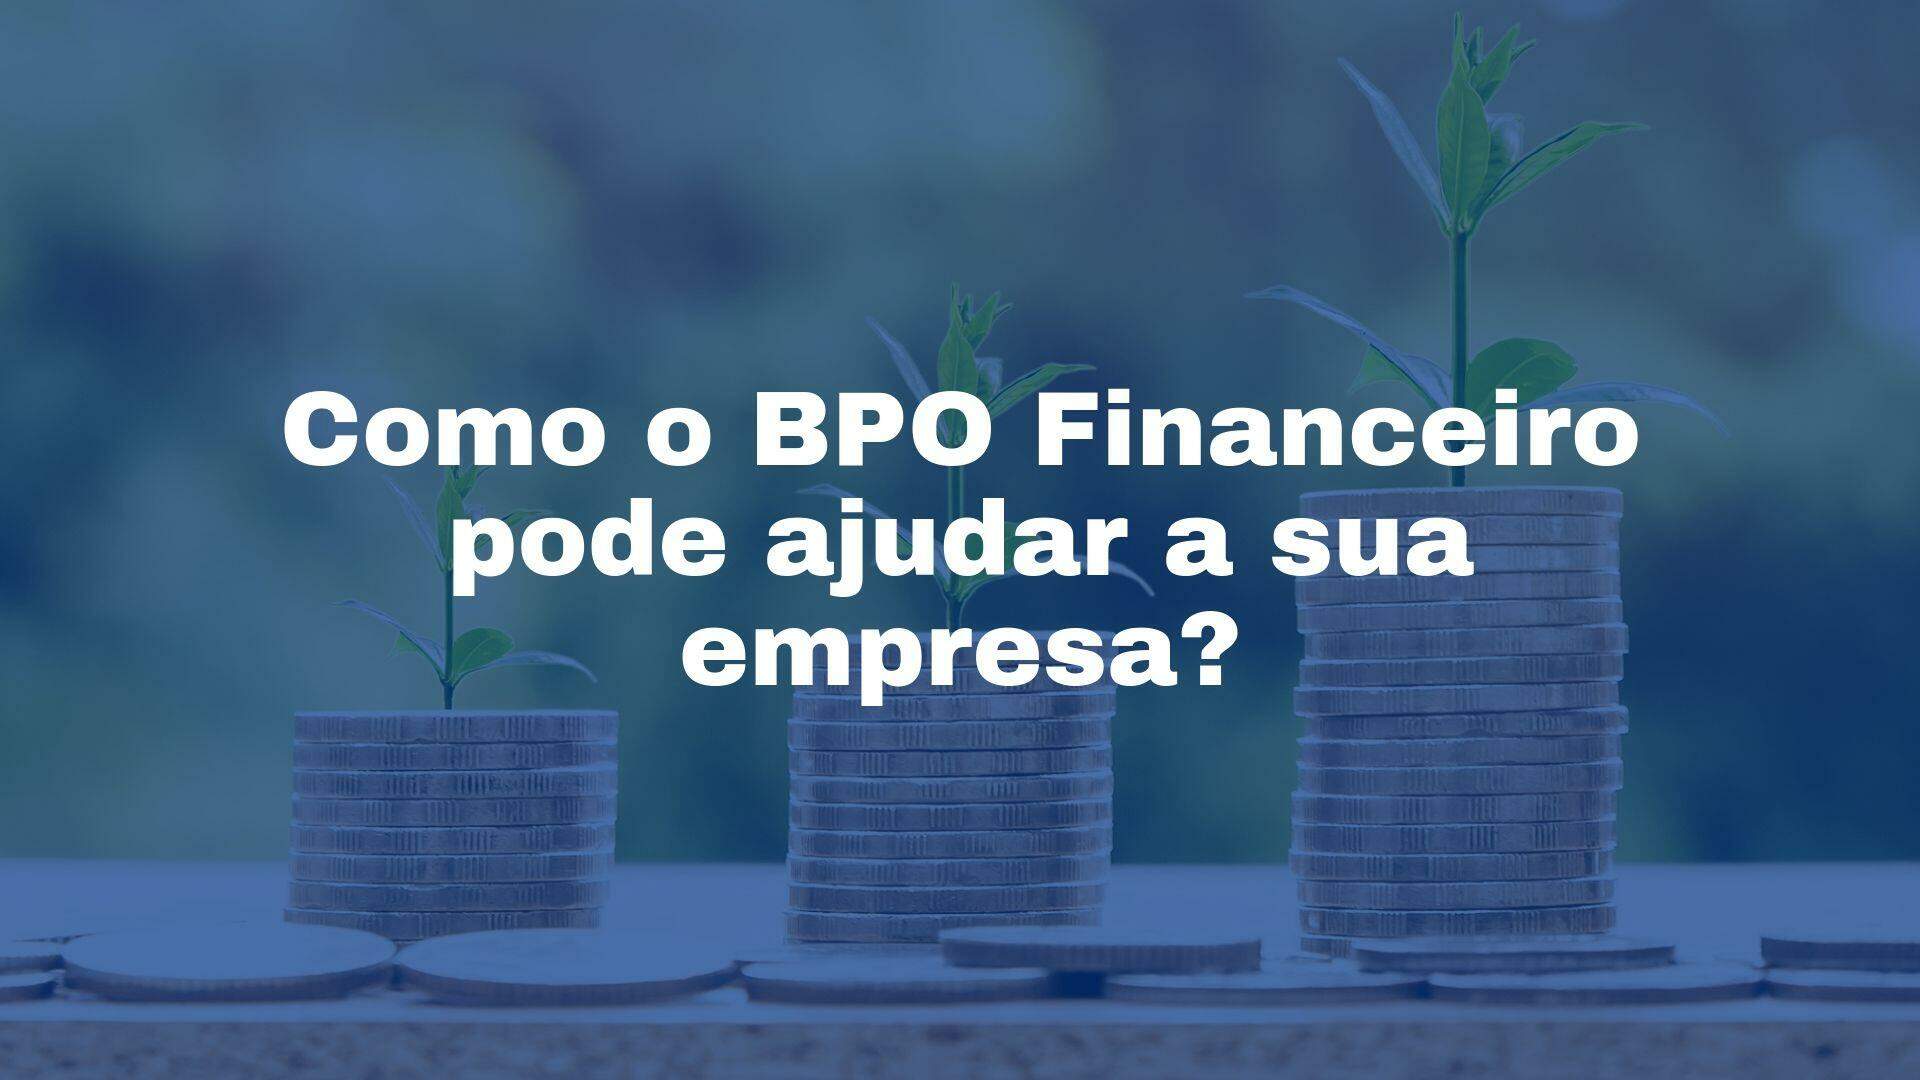 BPO Financeiro pode ajudar empresa